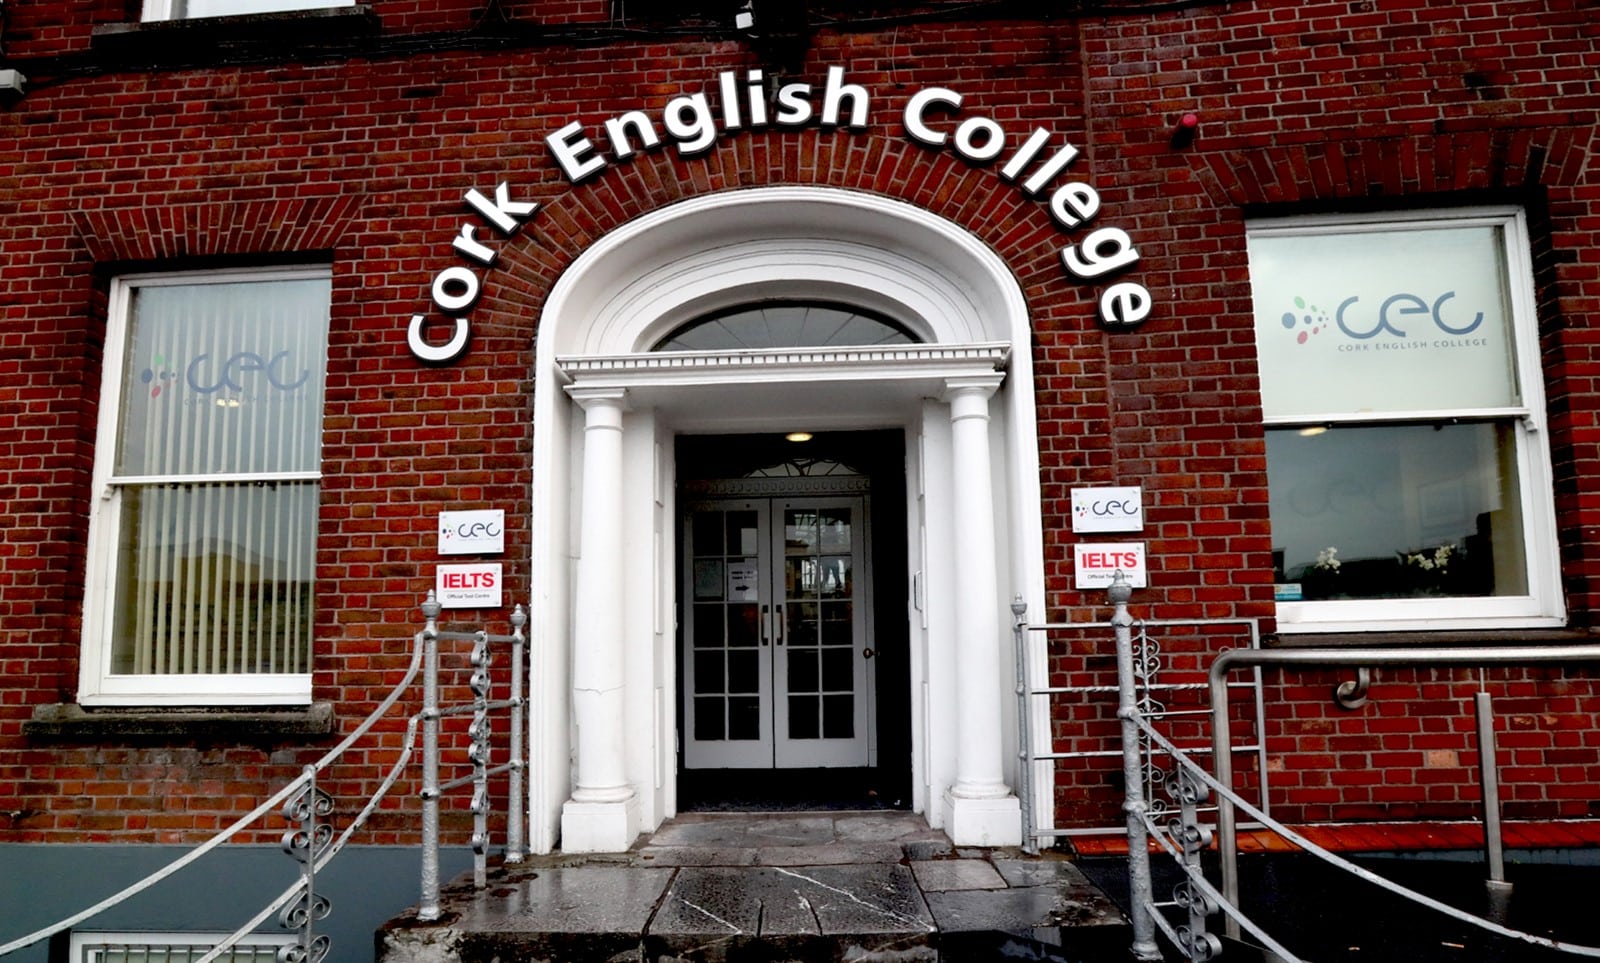 www.ringofcork.ie | Ring of Cork | Cork English College